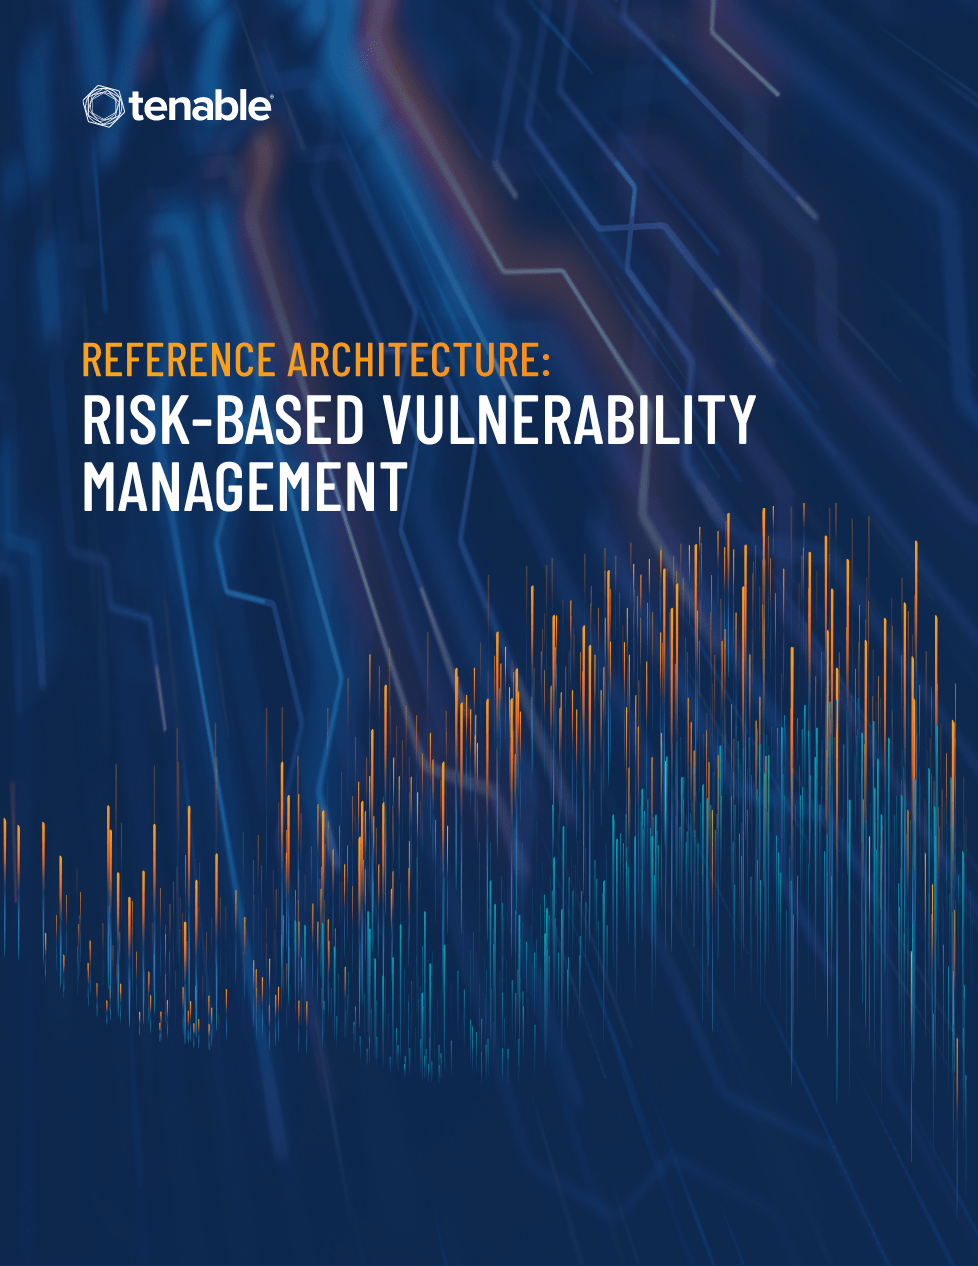 Screenshot 2020 11 24 Reference Architecture Risk based VM pdf - Reference Architecture: Risk-Based Vulnerability Management